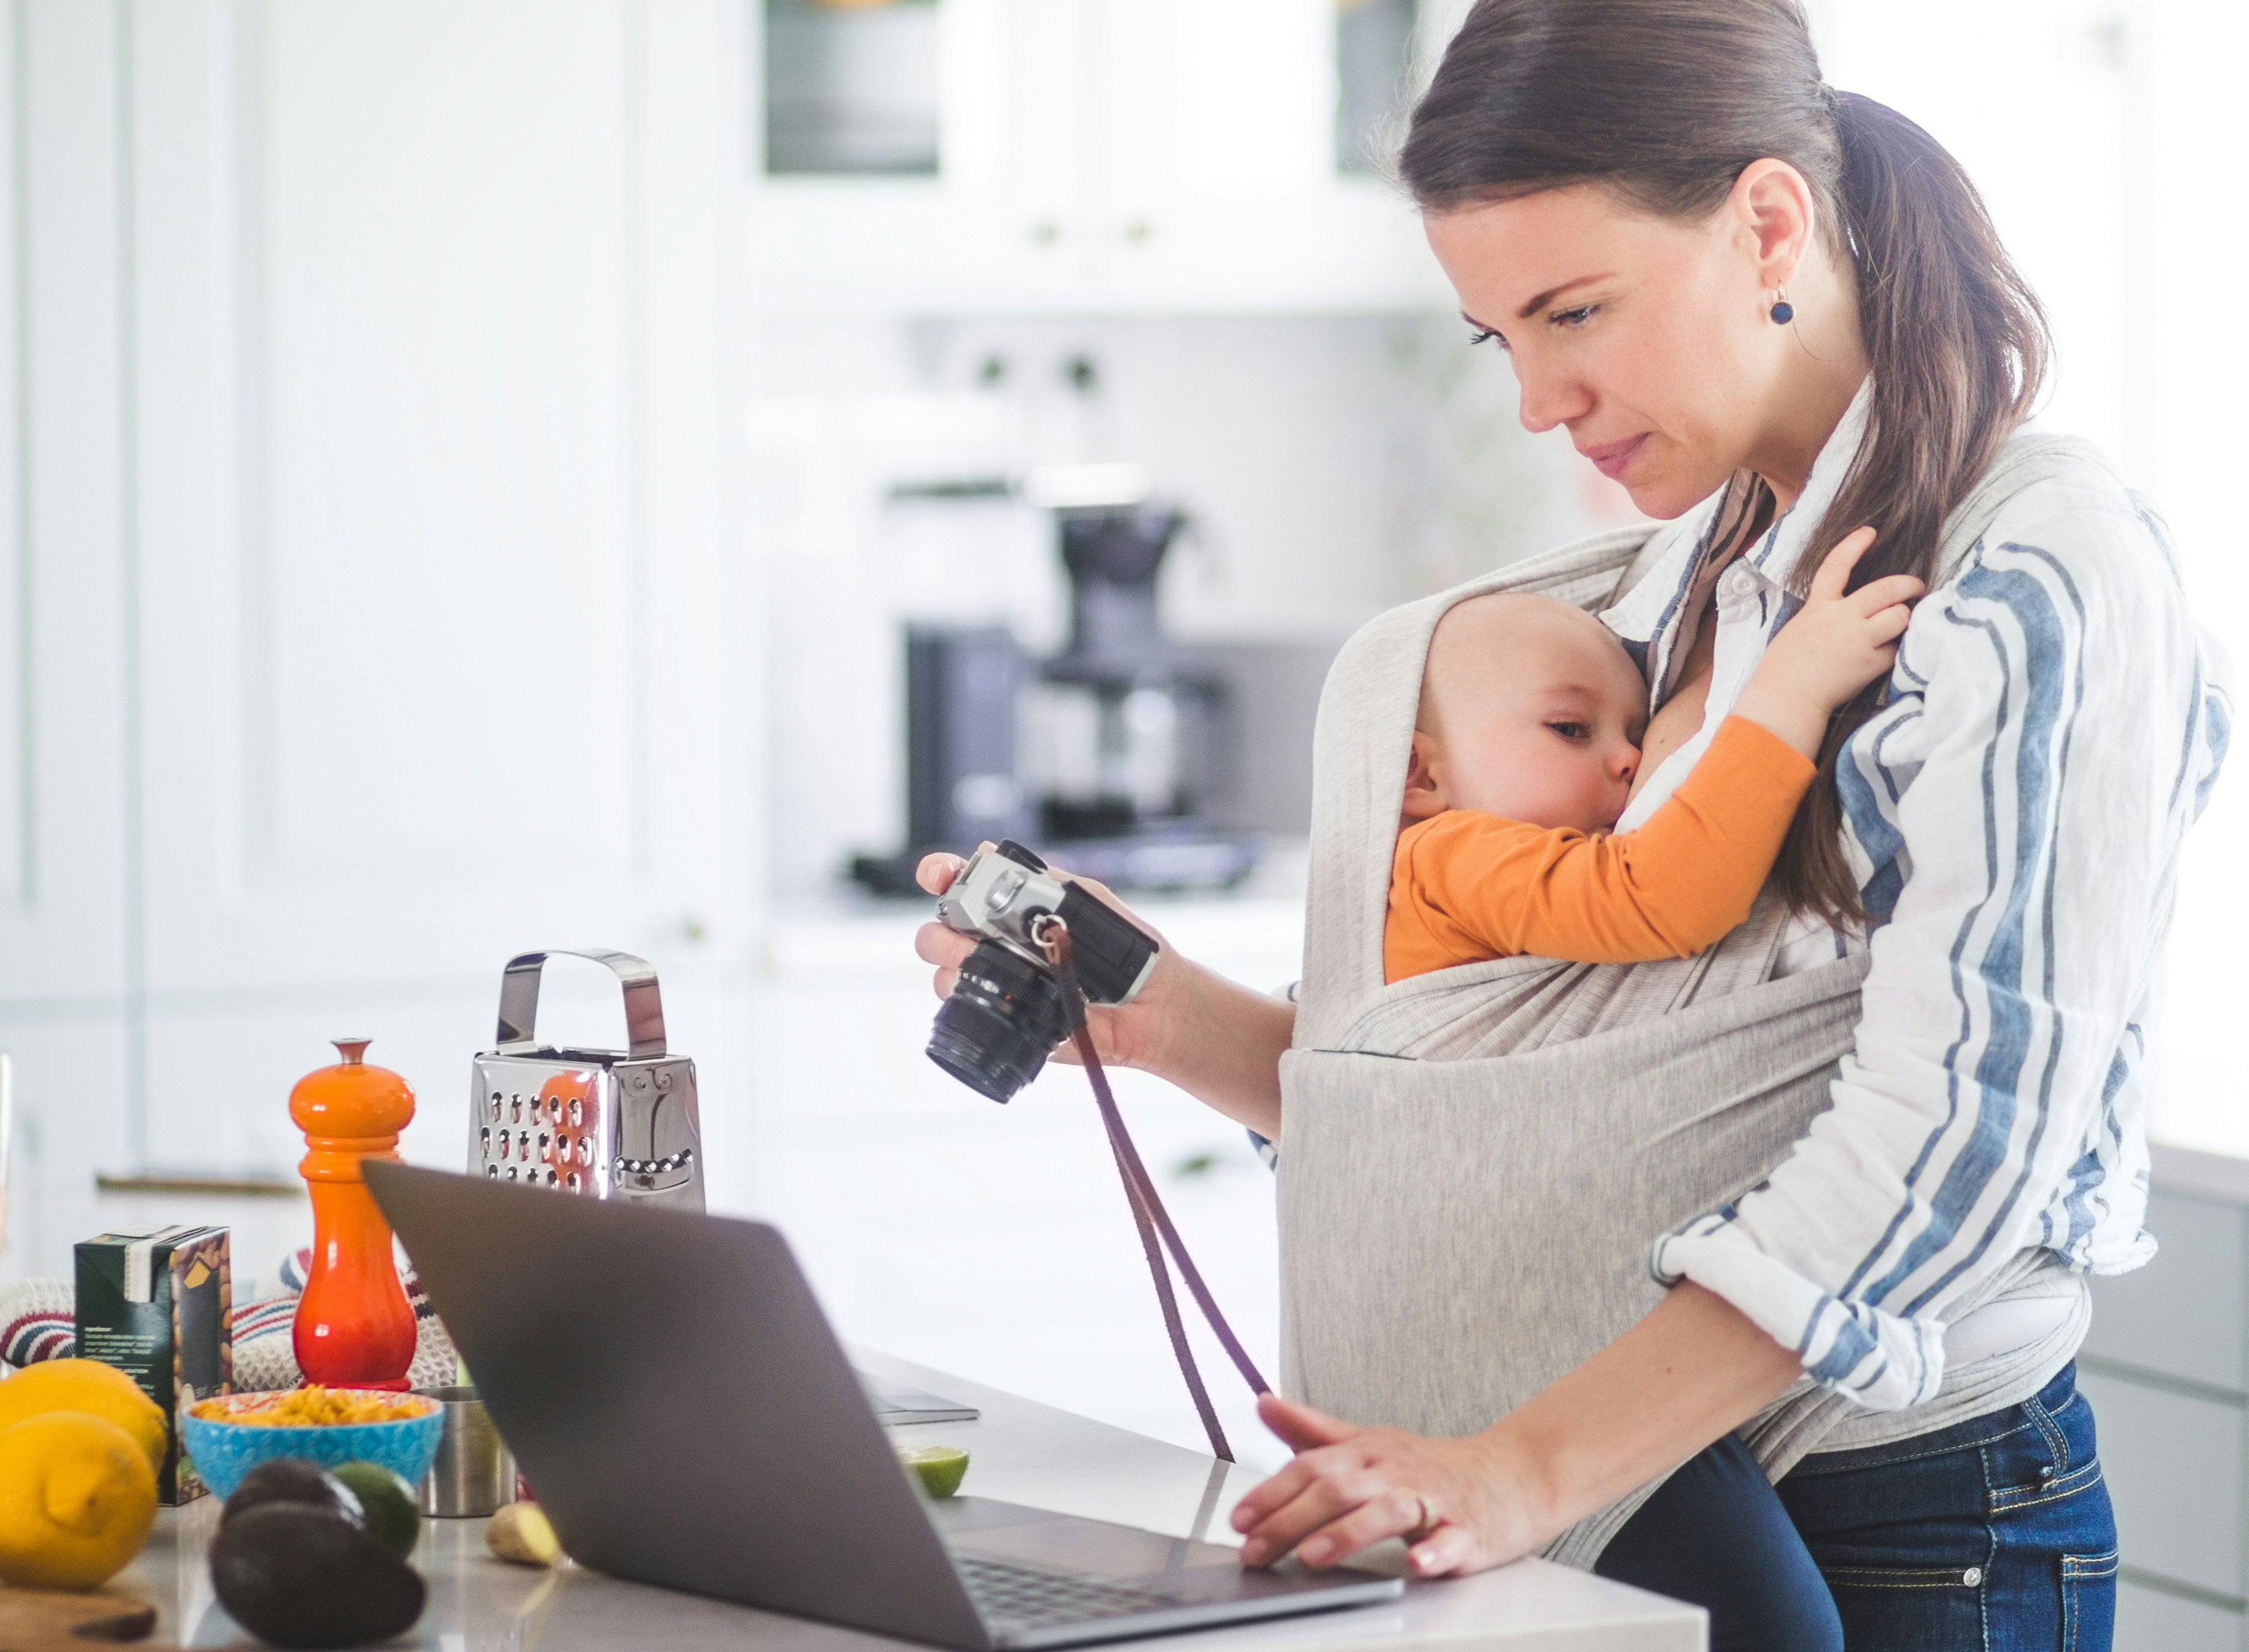 breastfeeding baby carrier